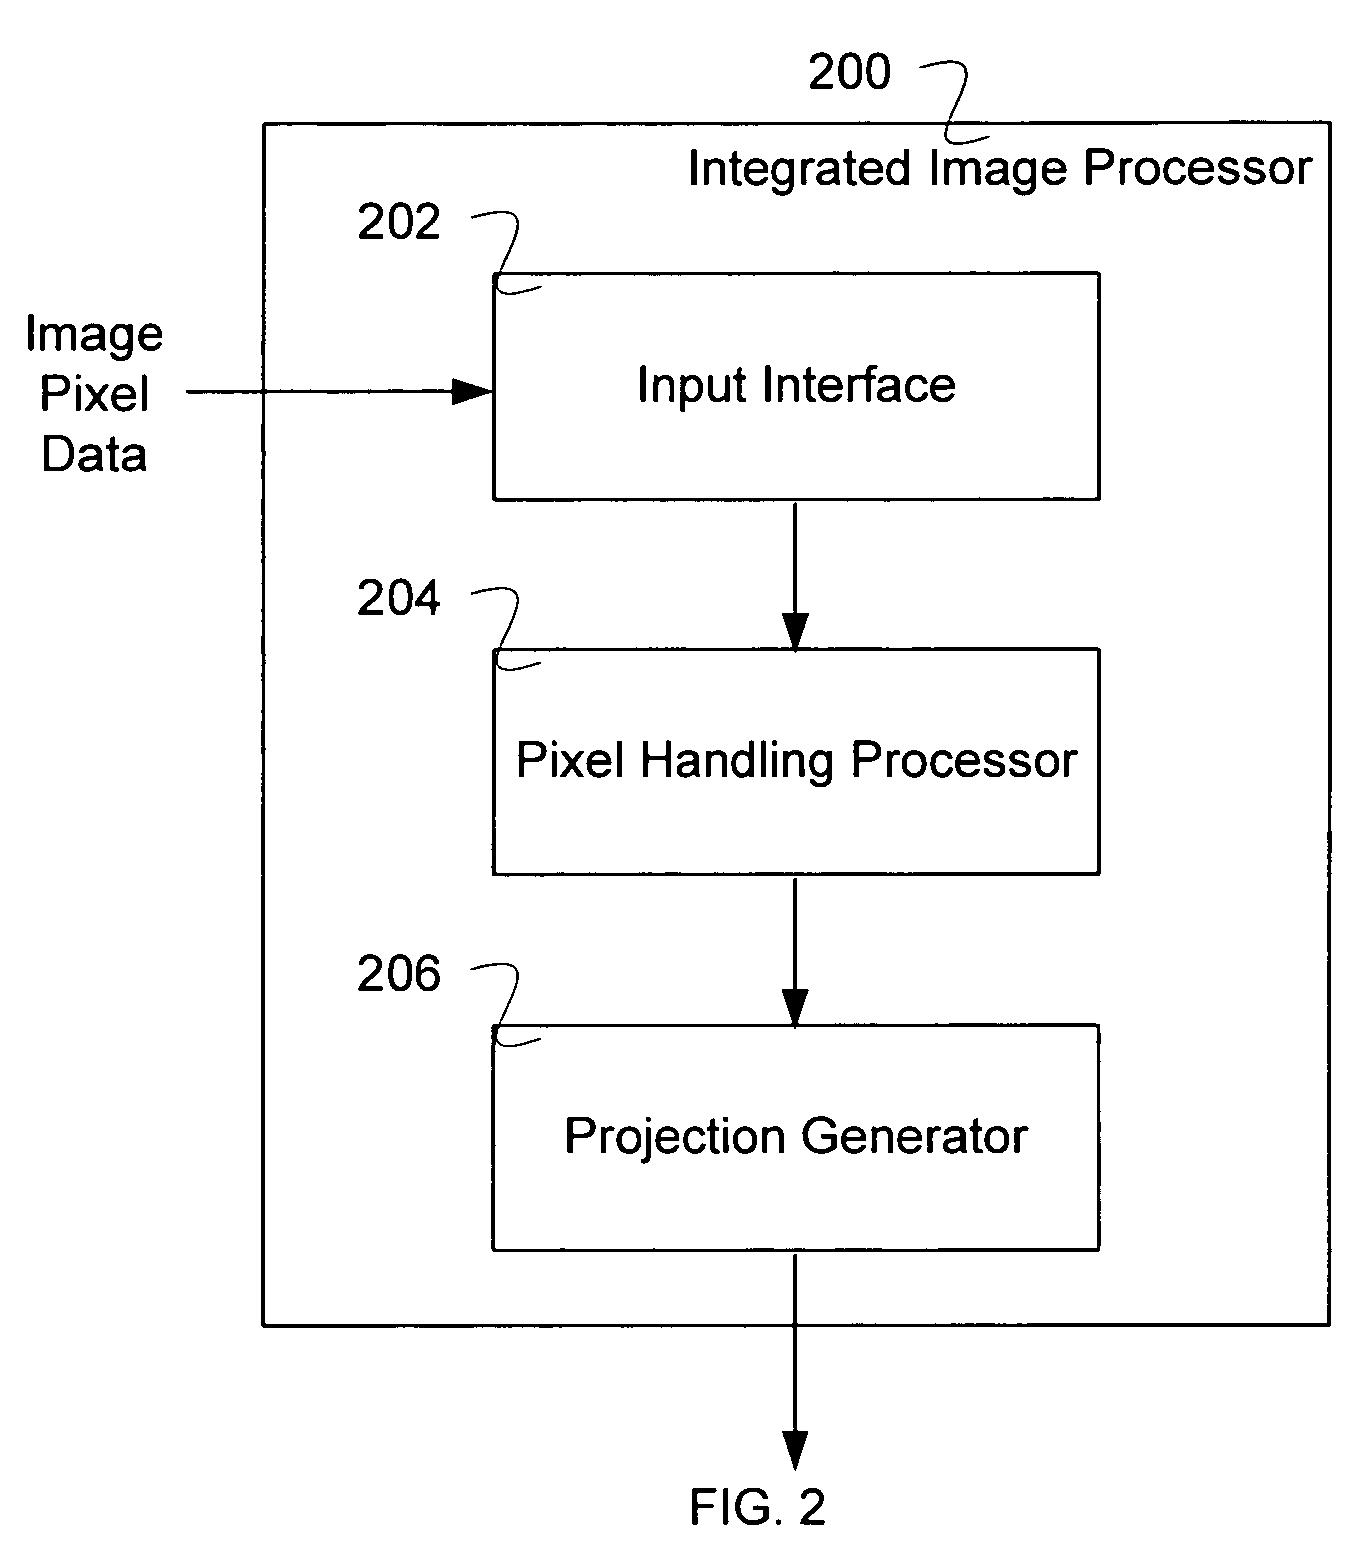 Integrated image processor